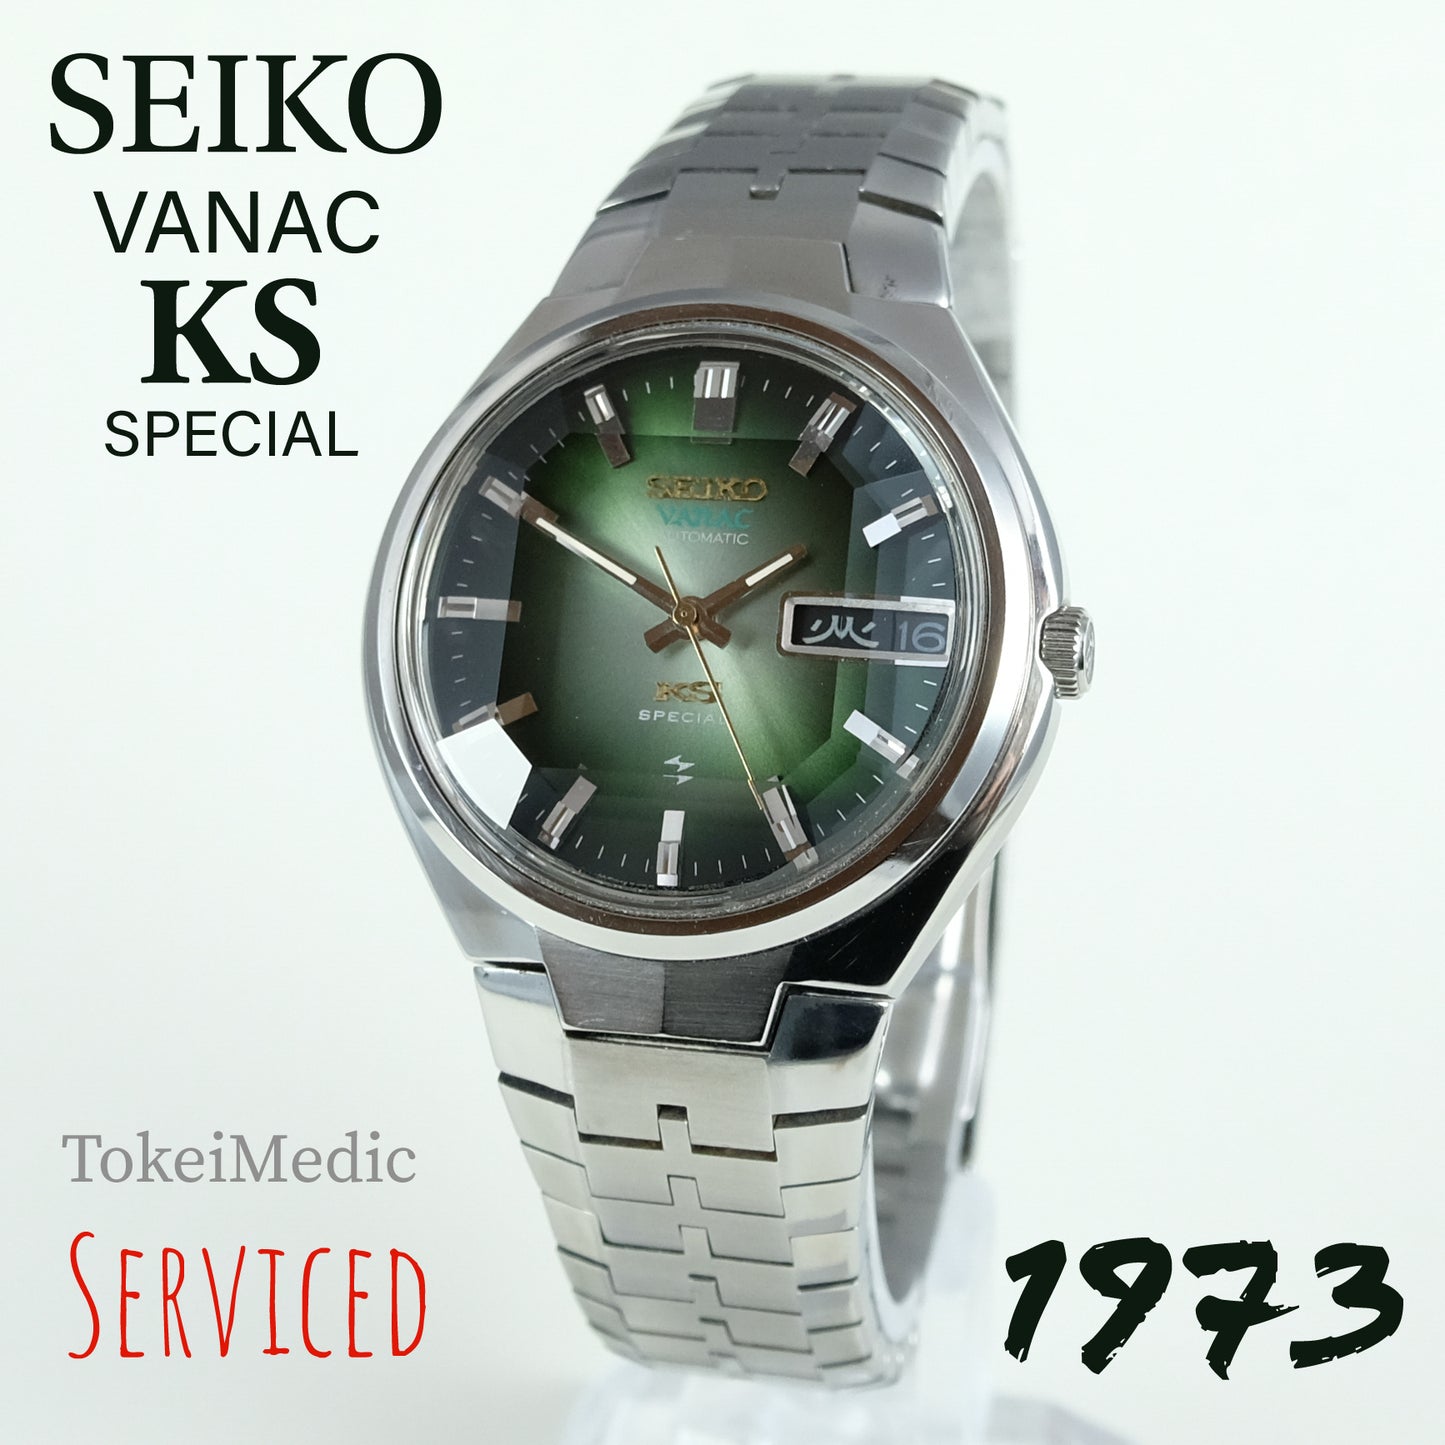 1973 Seiko KS Vanac Special 5246-6051